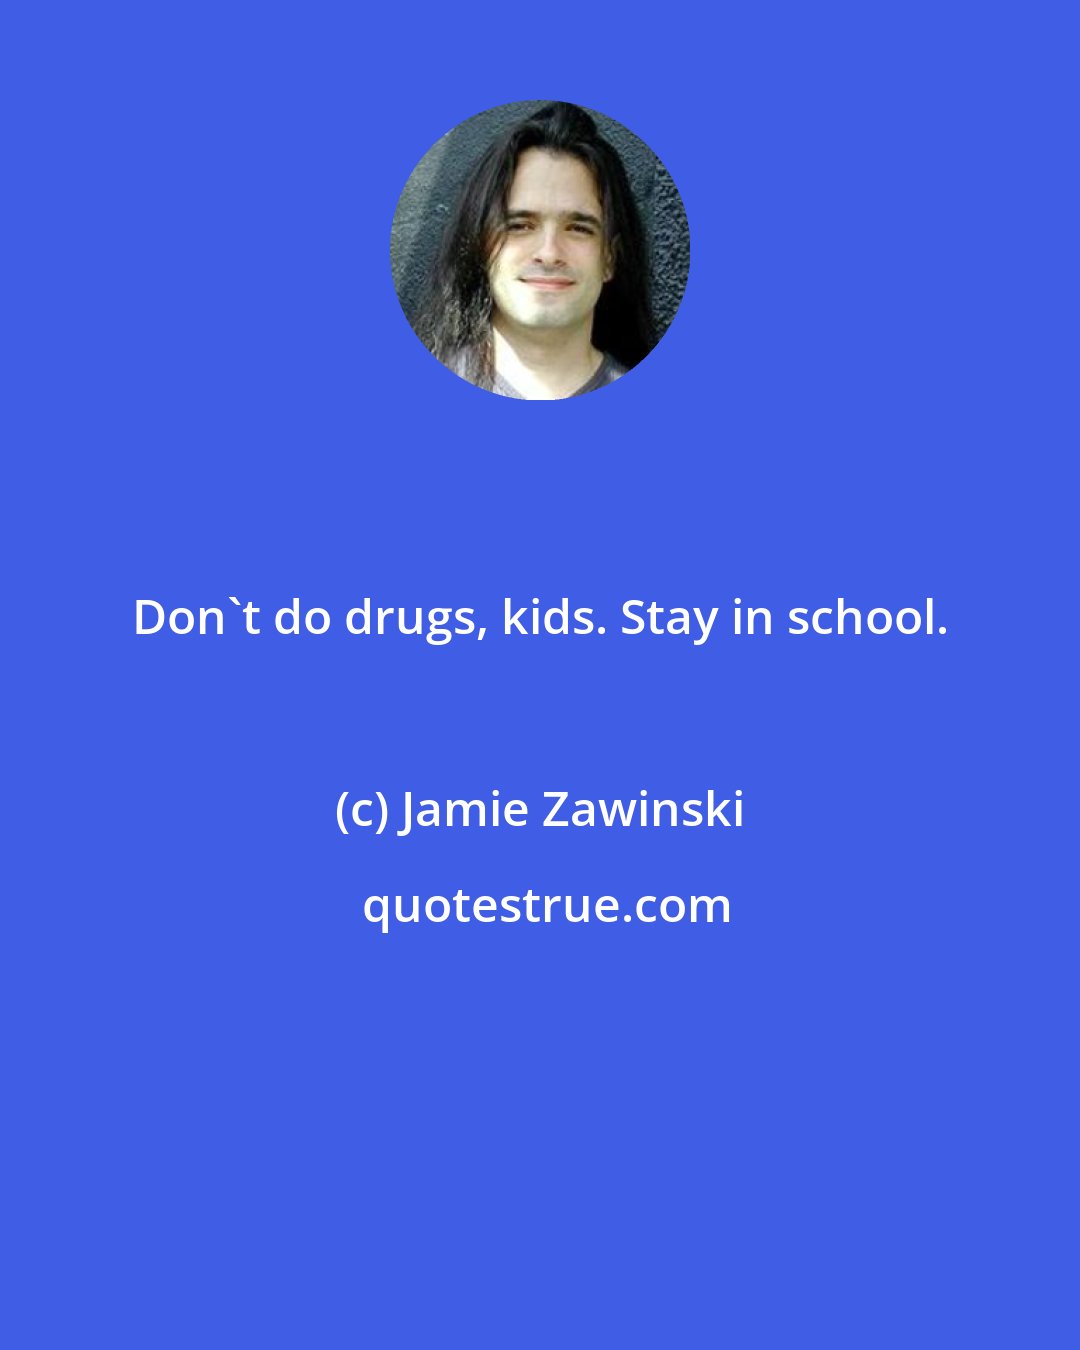 Jamie Zawinski: Don't do drugs, kids. Stay in school.